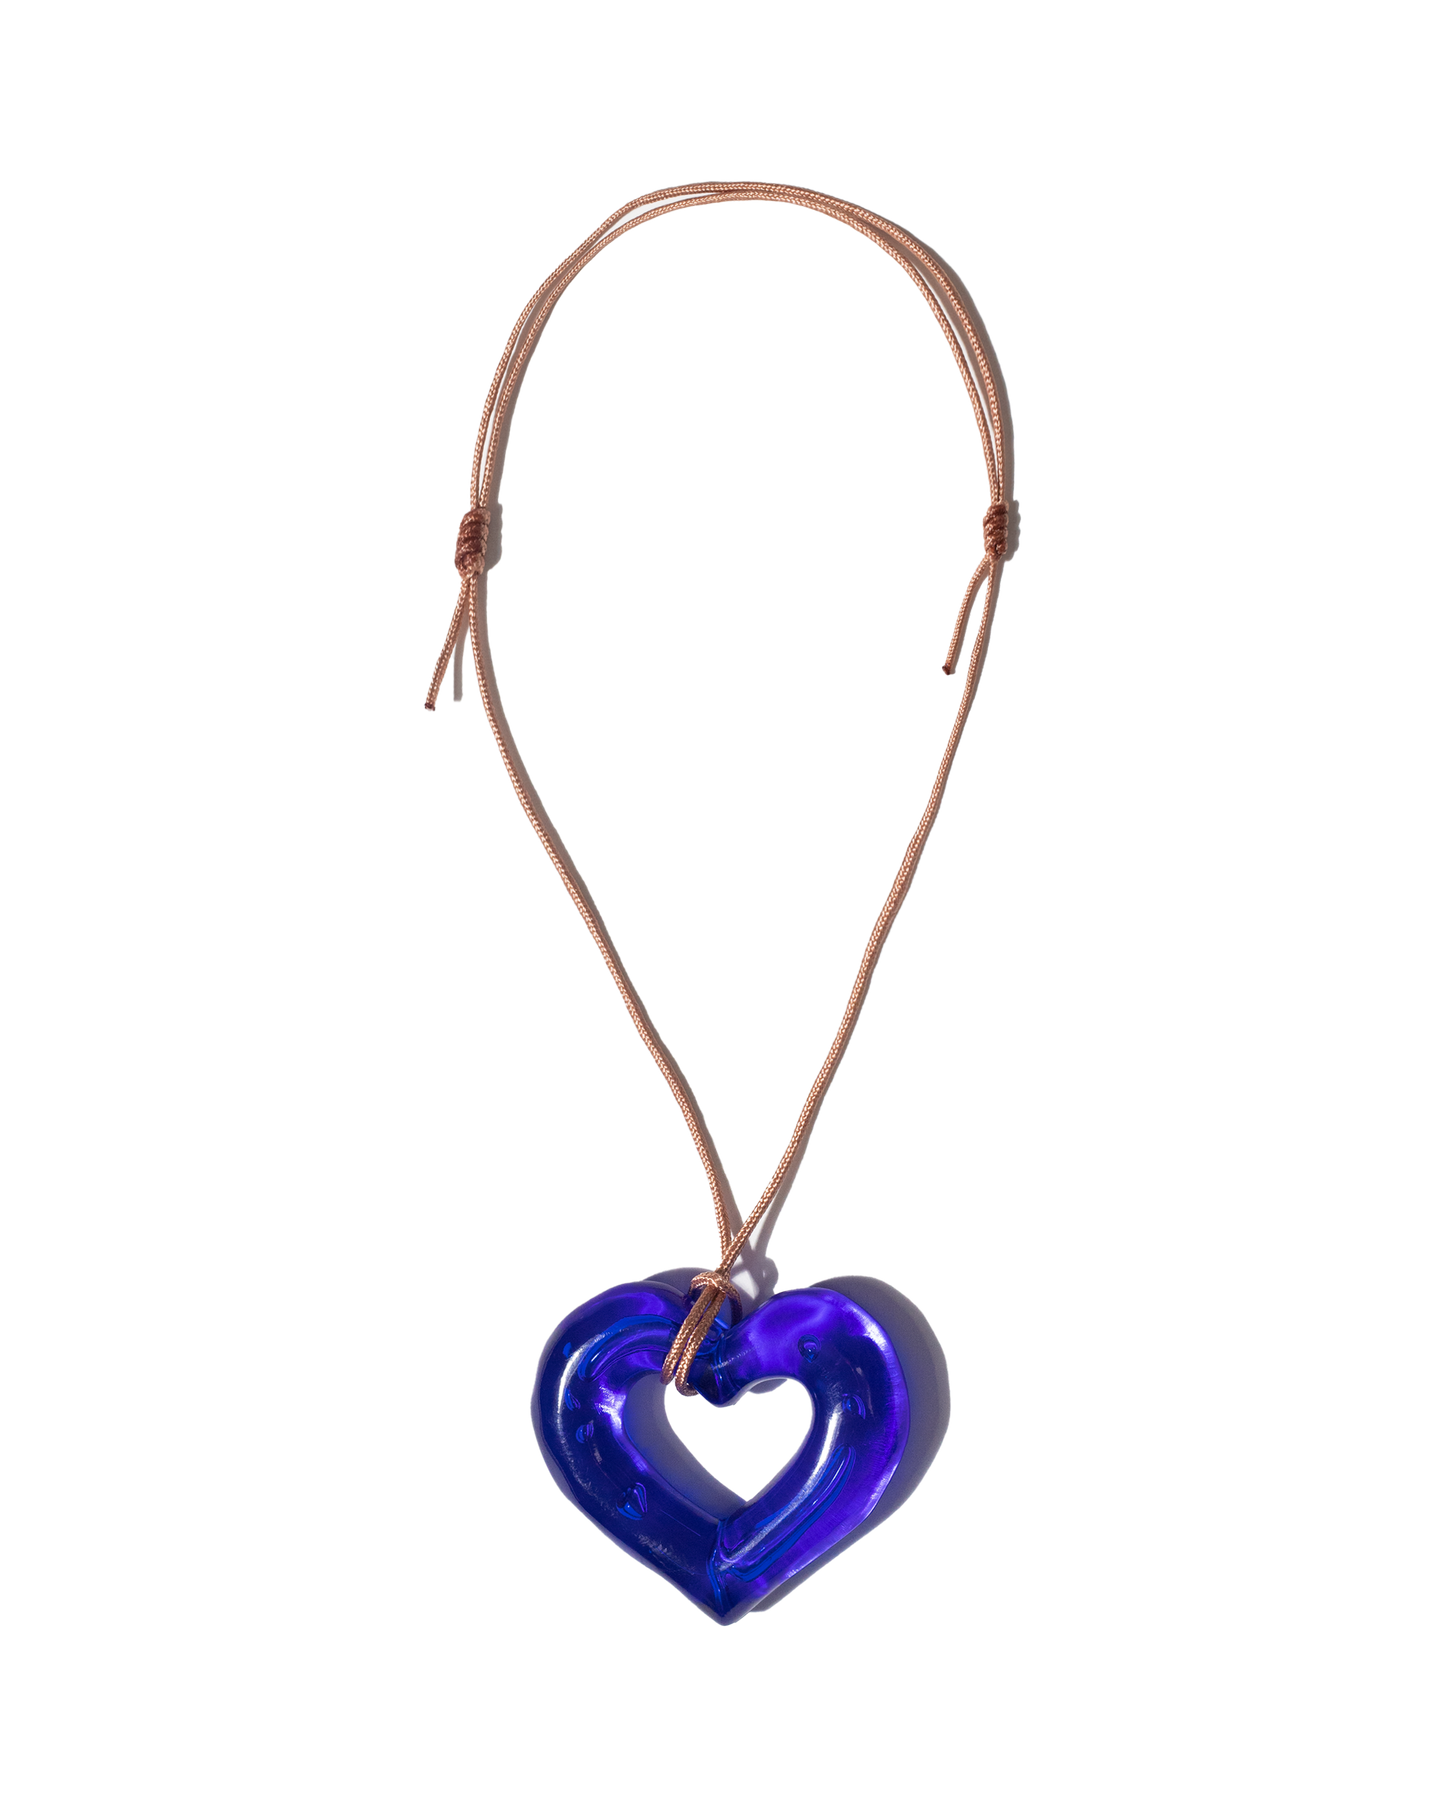 blue resin heart pendant with tan necklace string | Love U Pendant Blue | Baobei Label